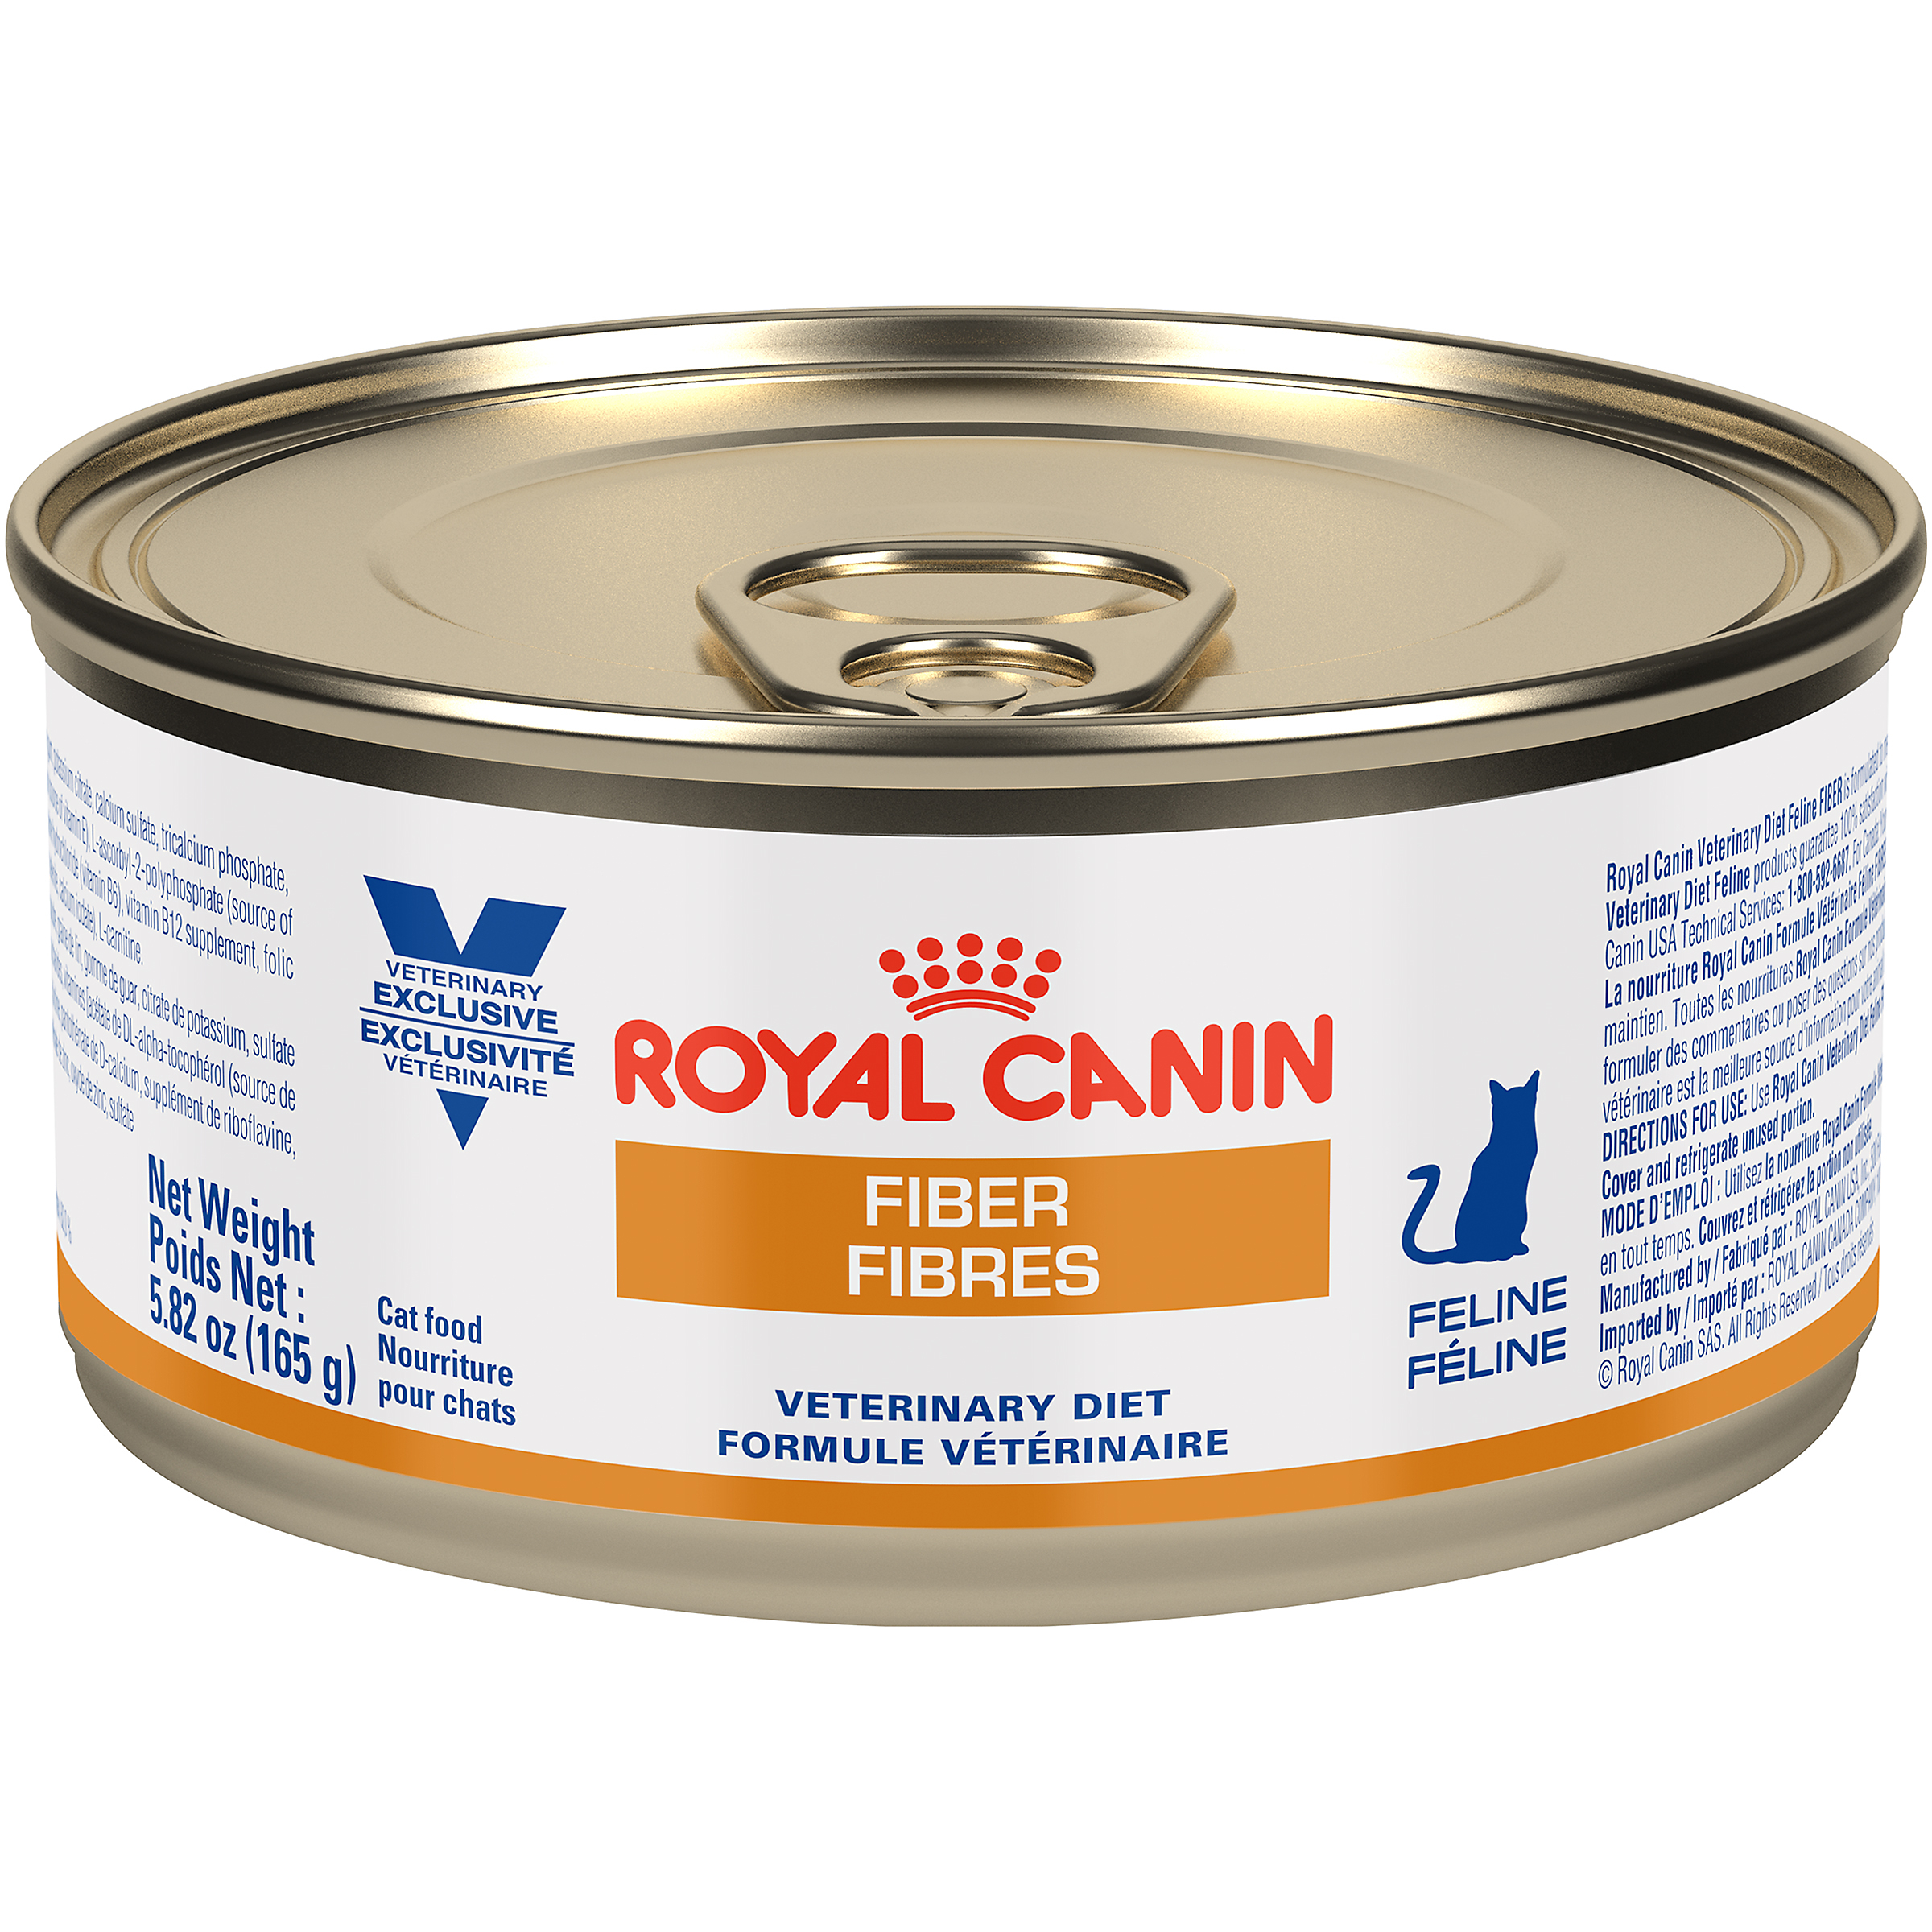 Feline Fiber Canned Cat Food Royal Canin